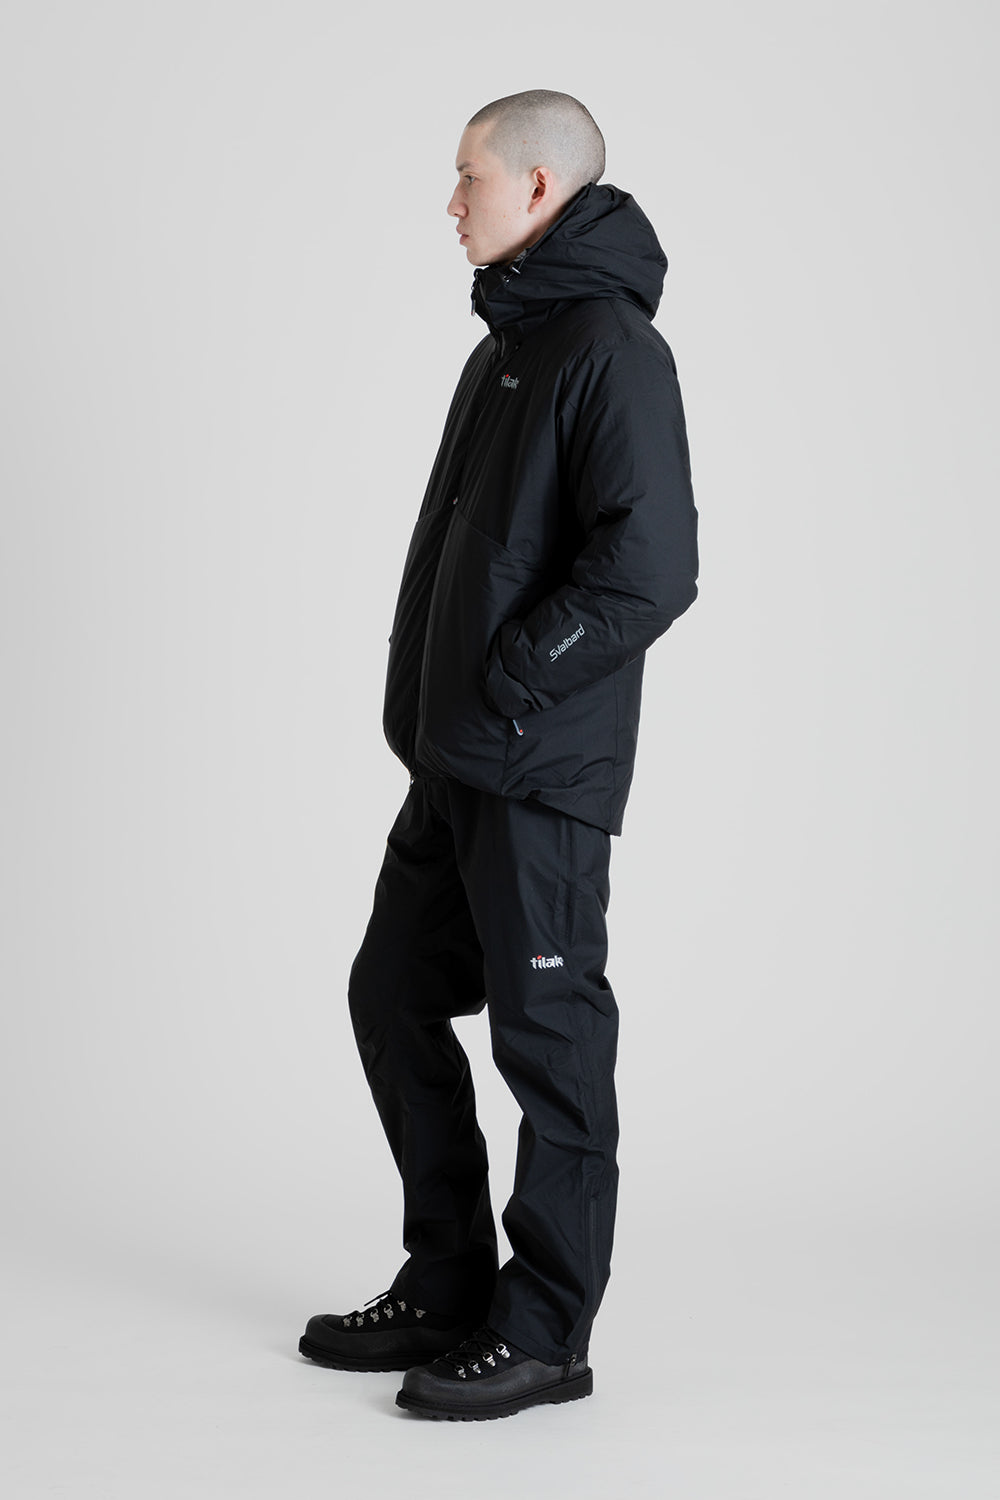 Tilak Svalbard Hood Jacket in Caviar Black | Wallace Mercantile Shop